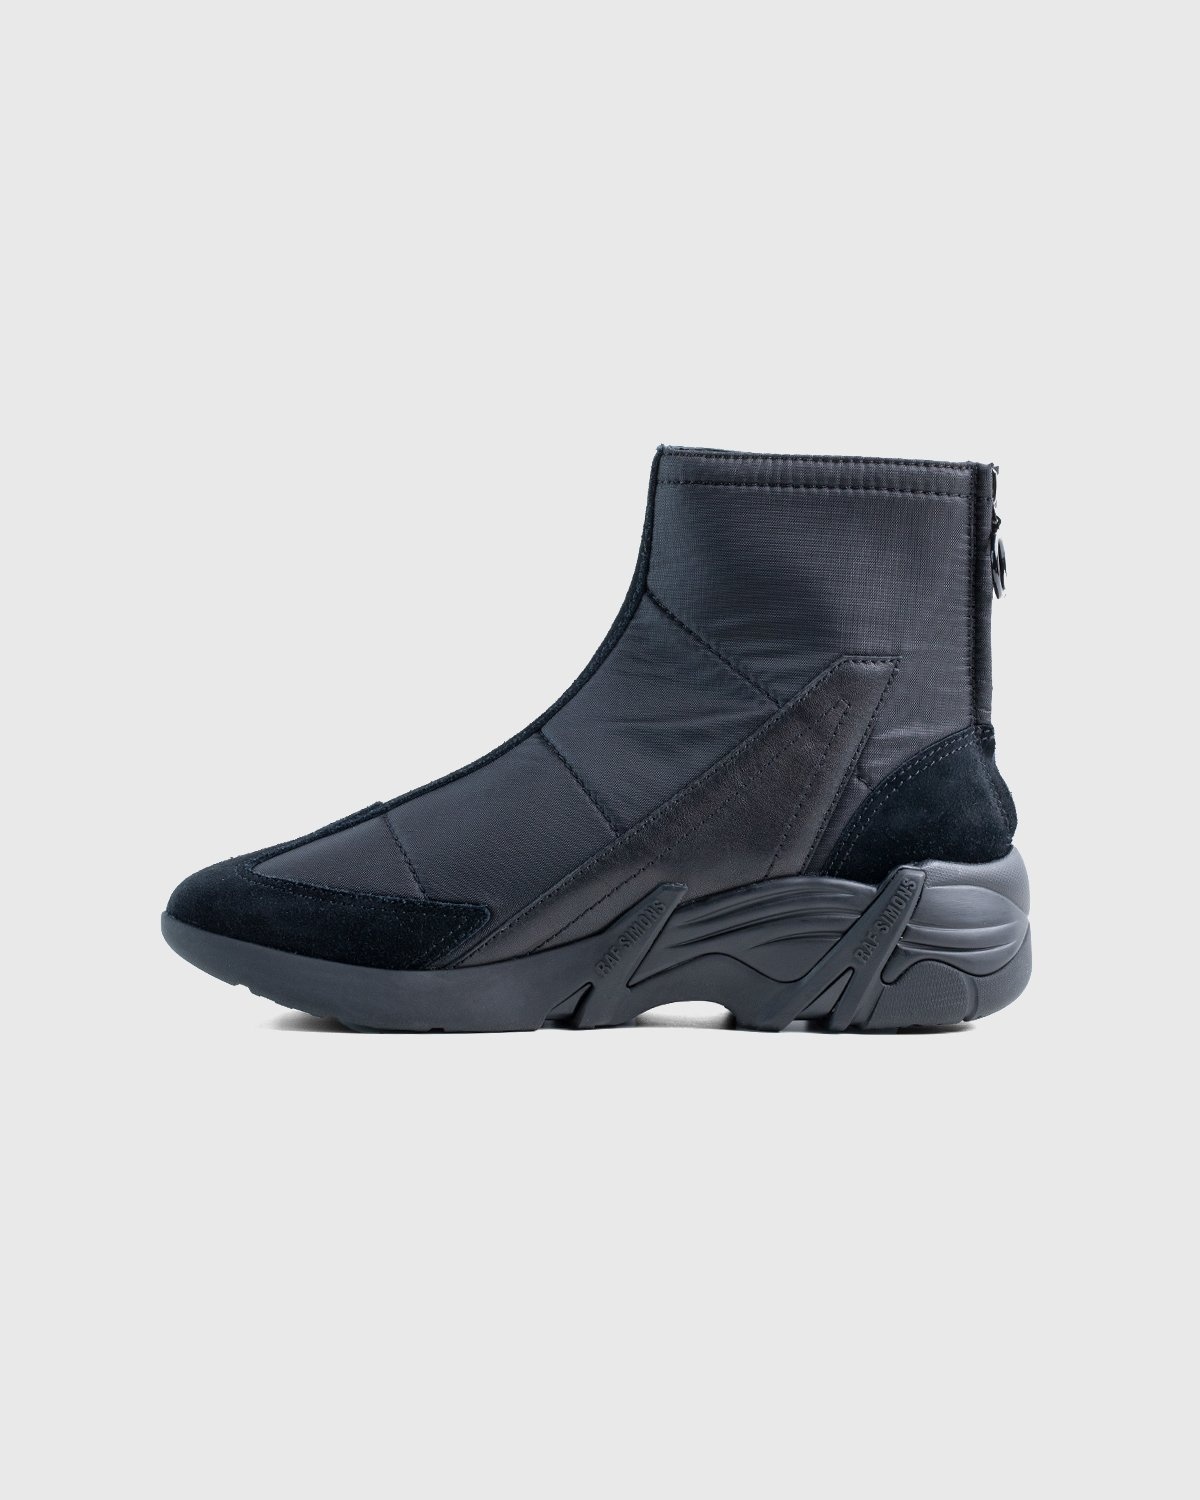 Raf Simons – Cylon 22 Black - High Top Sneakers - Black - Image 6